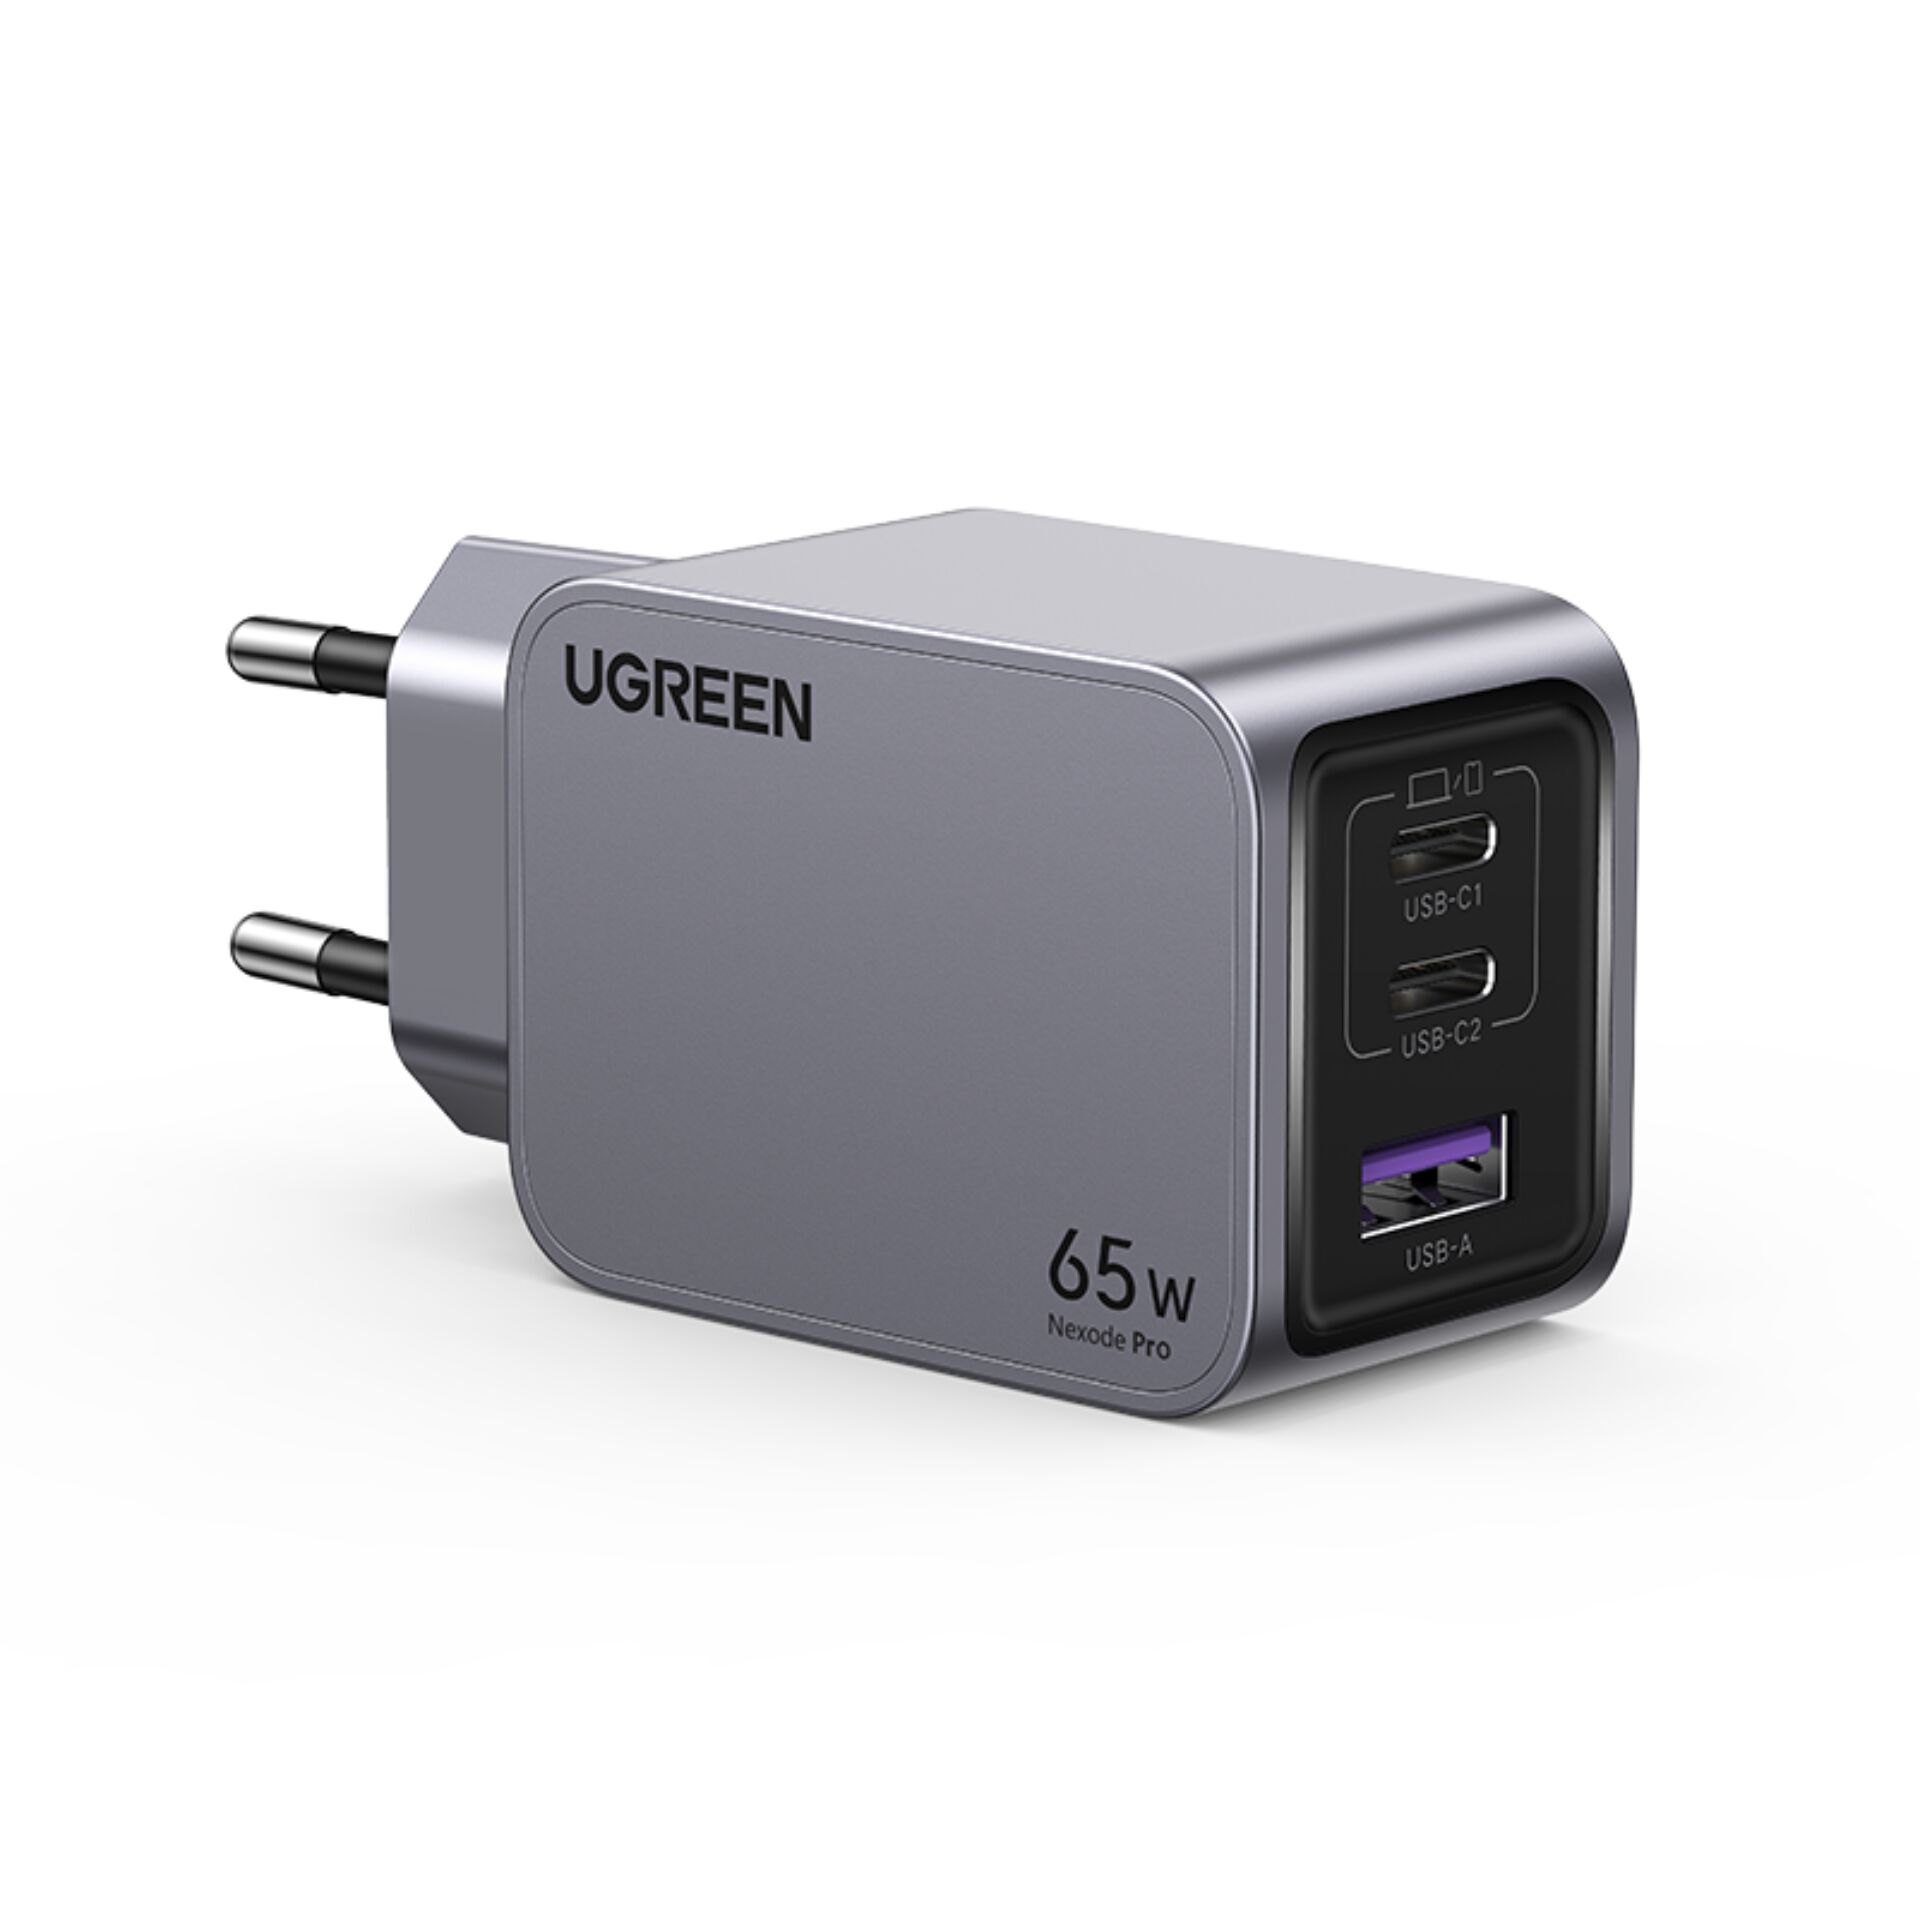 Ugreen Nexode Pro 65W USB-C Ladegerät 3-Ports Mini GaN Schnellladegerat schwarz/grau